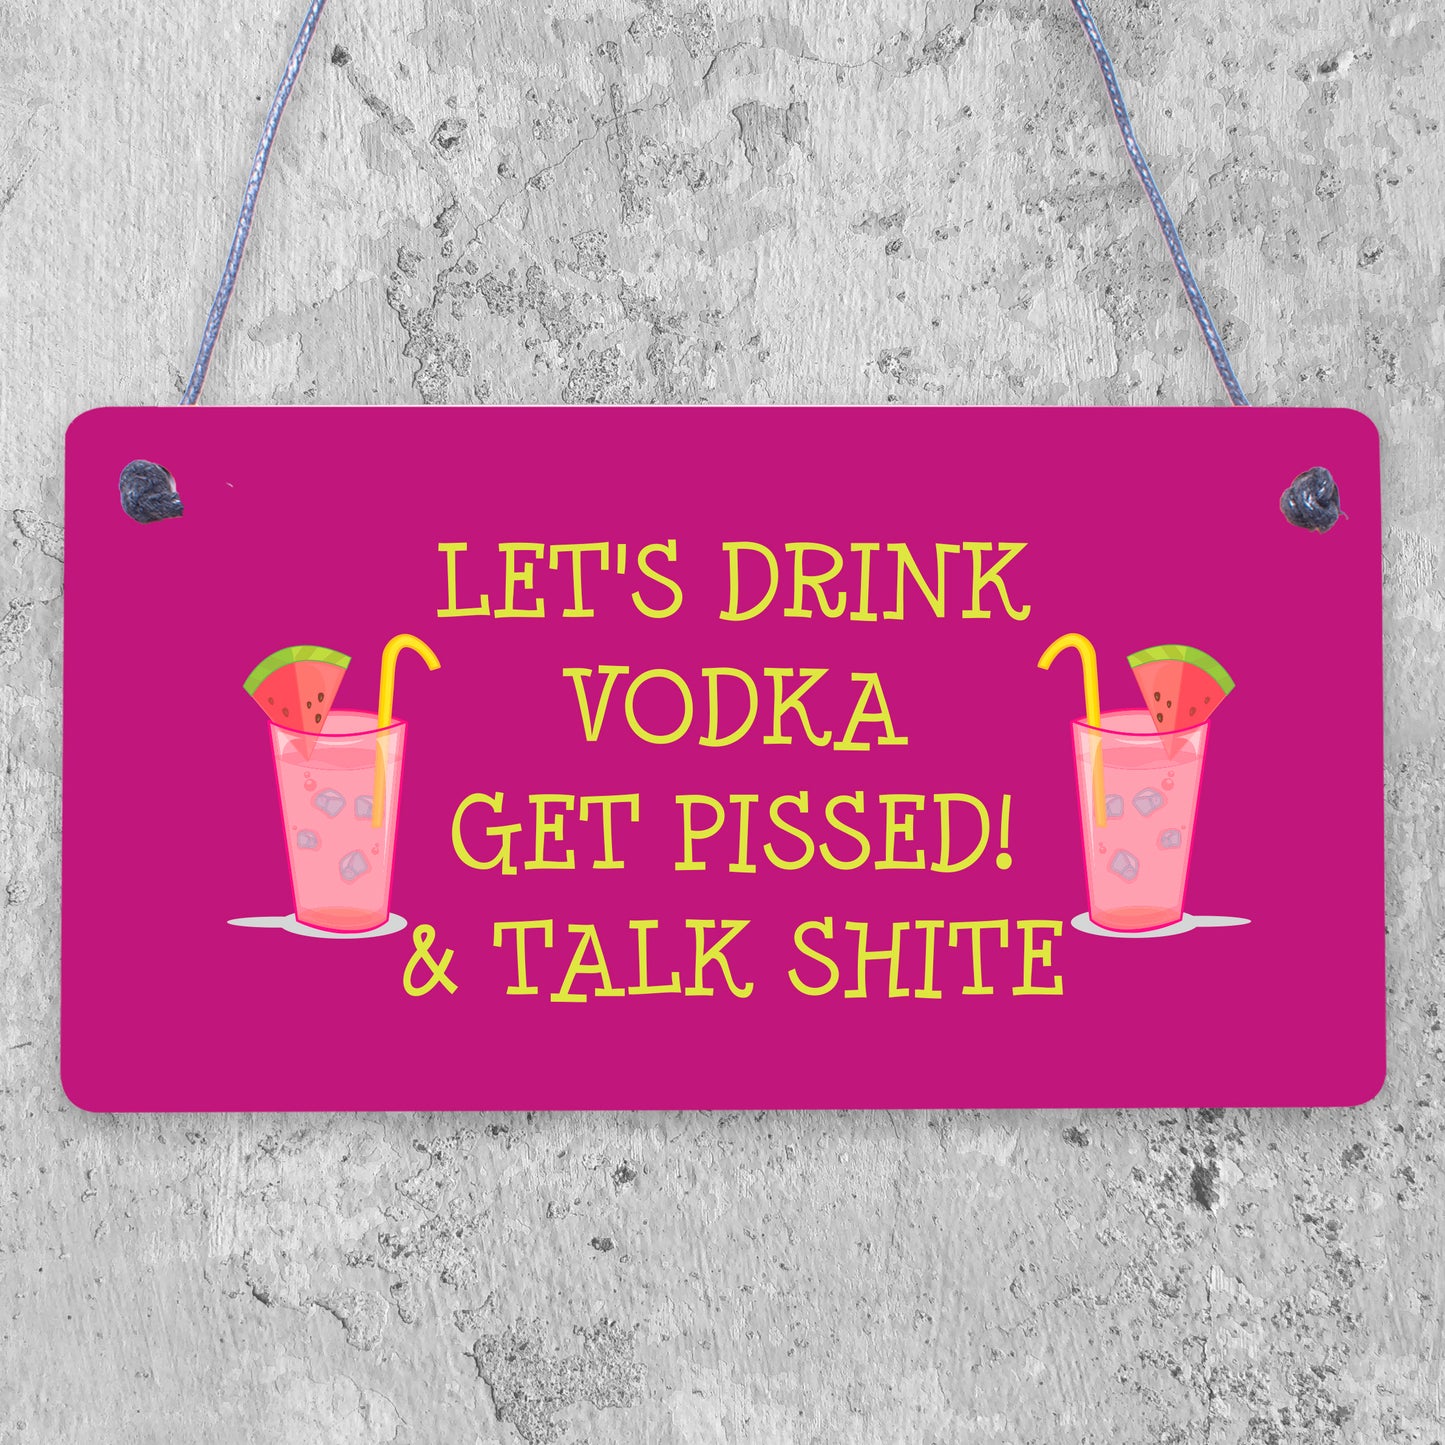 Funny Vodka Sign Man Cave Home Bar Pub Plaque Decor Alcohol Friendship Gifts